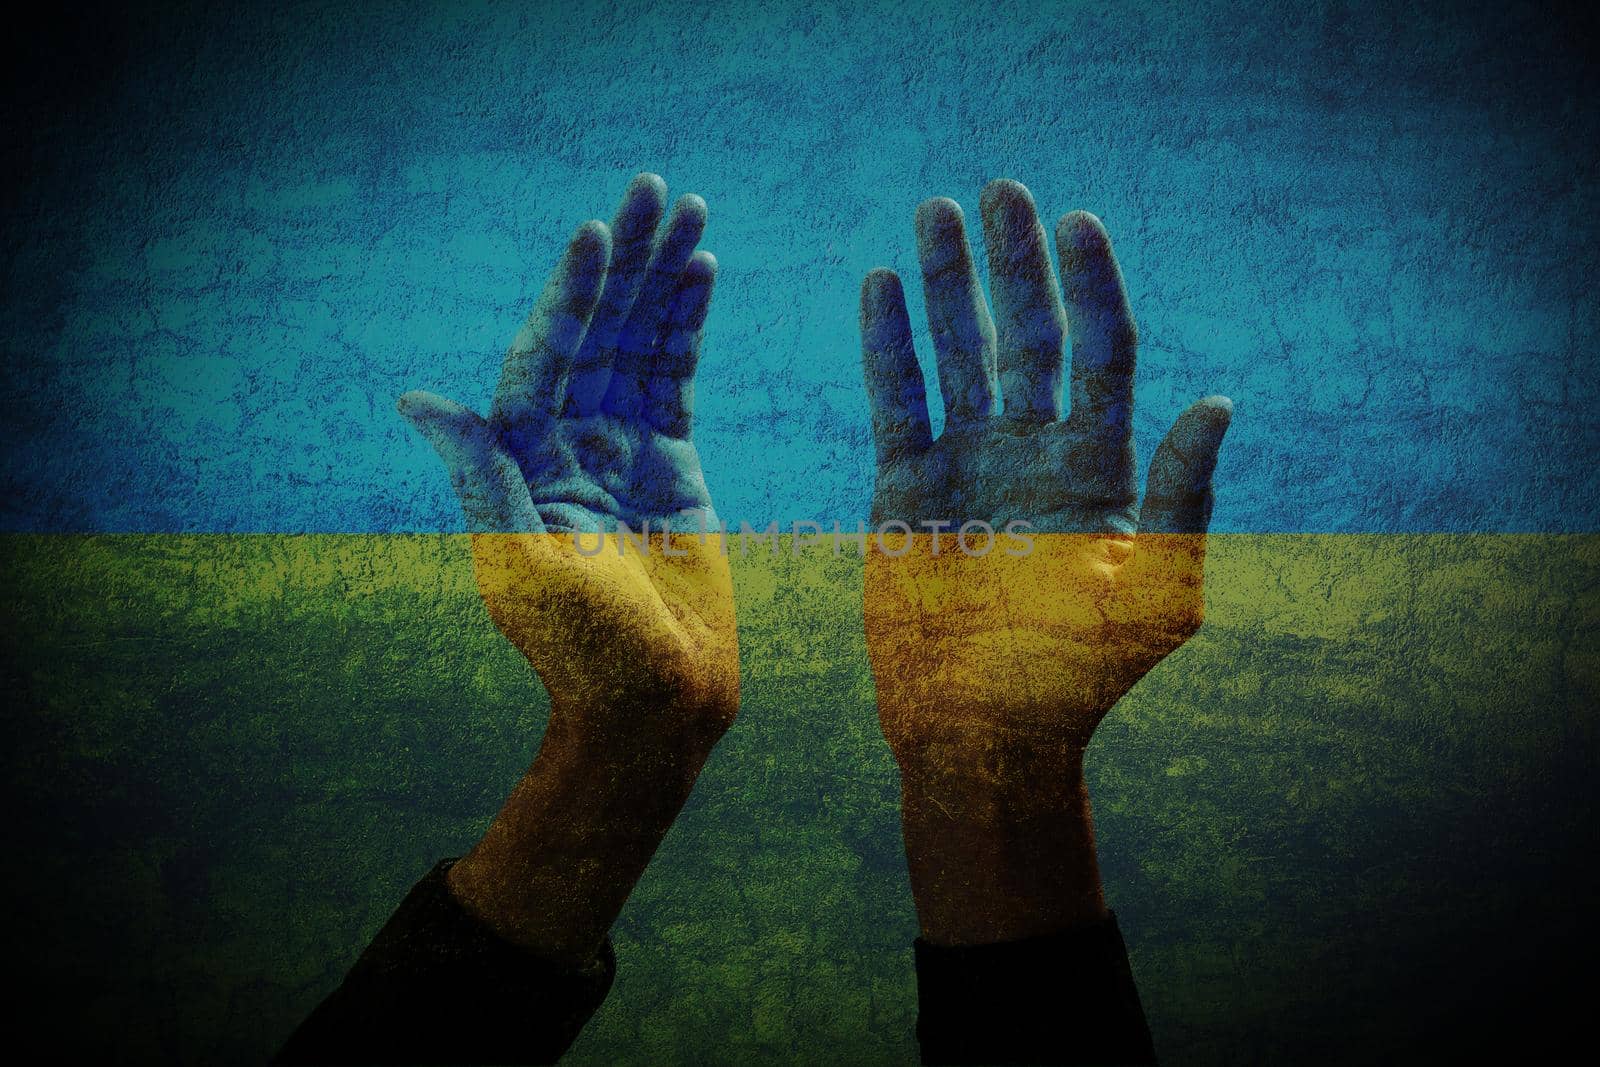 ukraine crisis concept illustration in ukraine flag colors by Andelov13